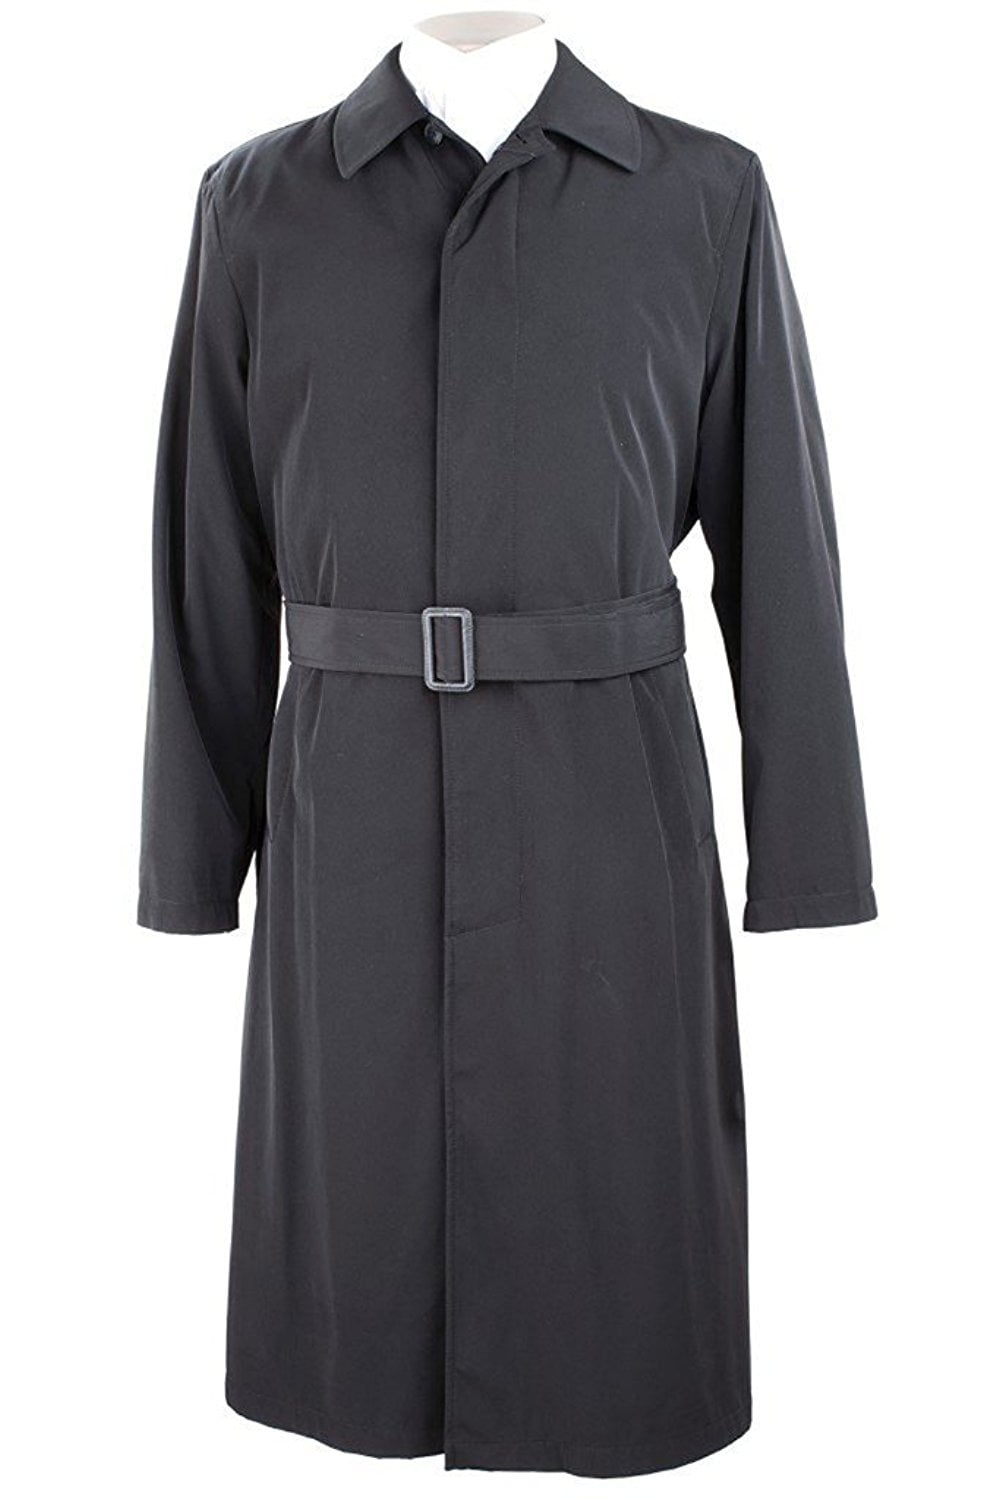 Calvin Klein Men's Full Length All Year Round Raincoat with Belt ...